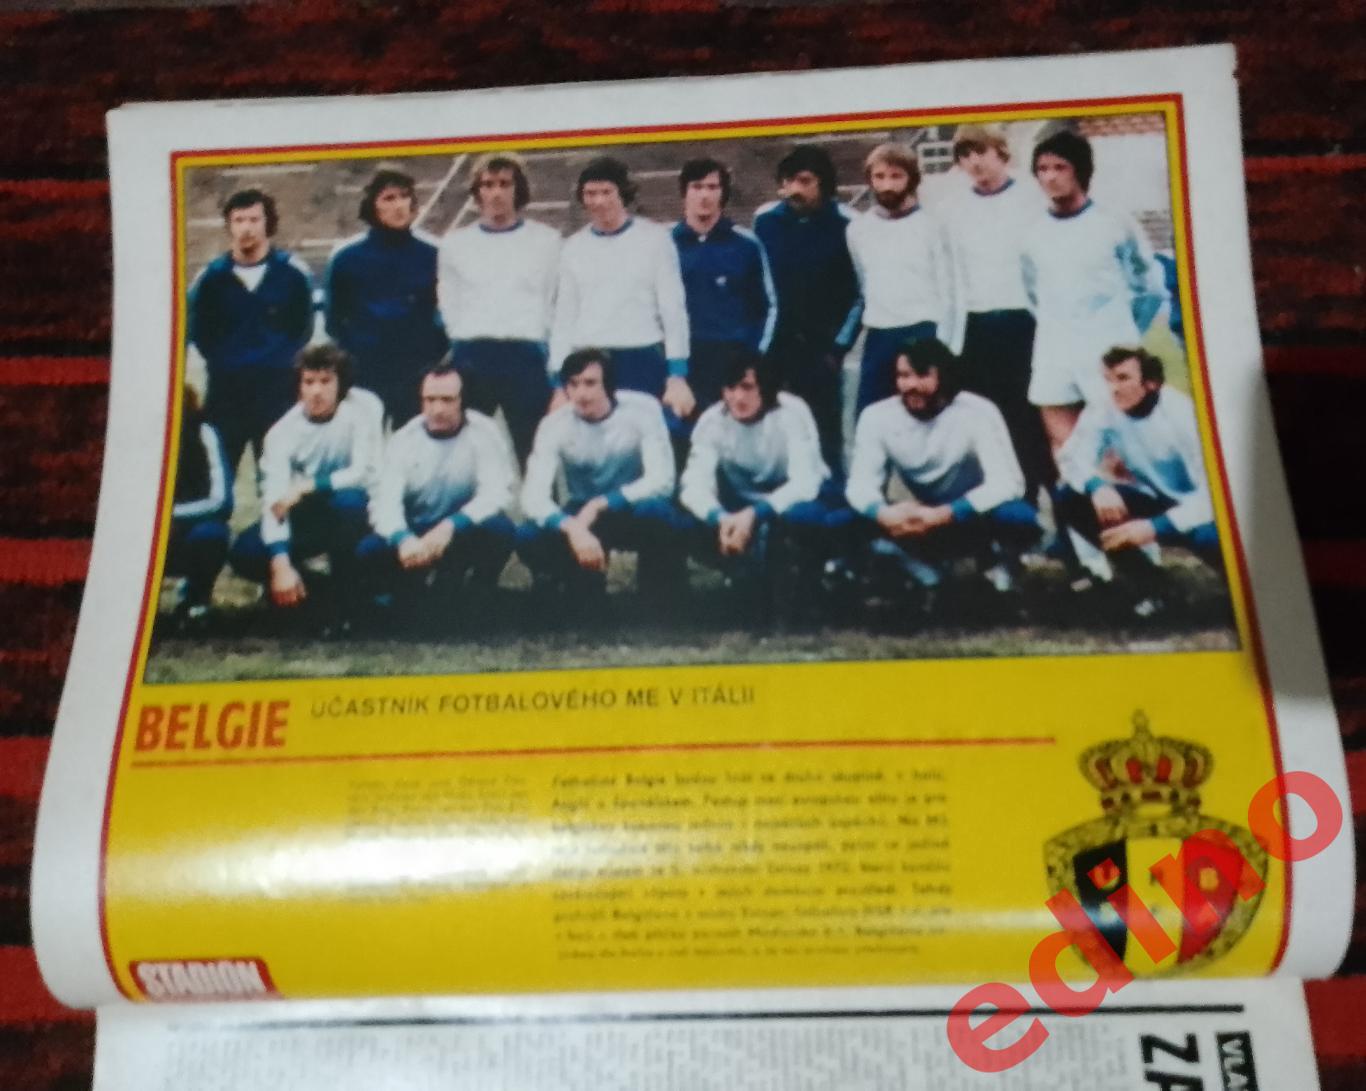 журнал Стадион(stadion) 1980 год Бельгия участник Евро 80